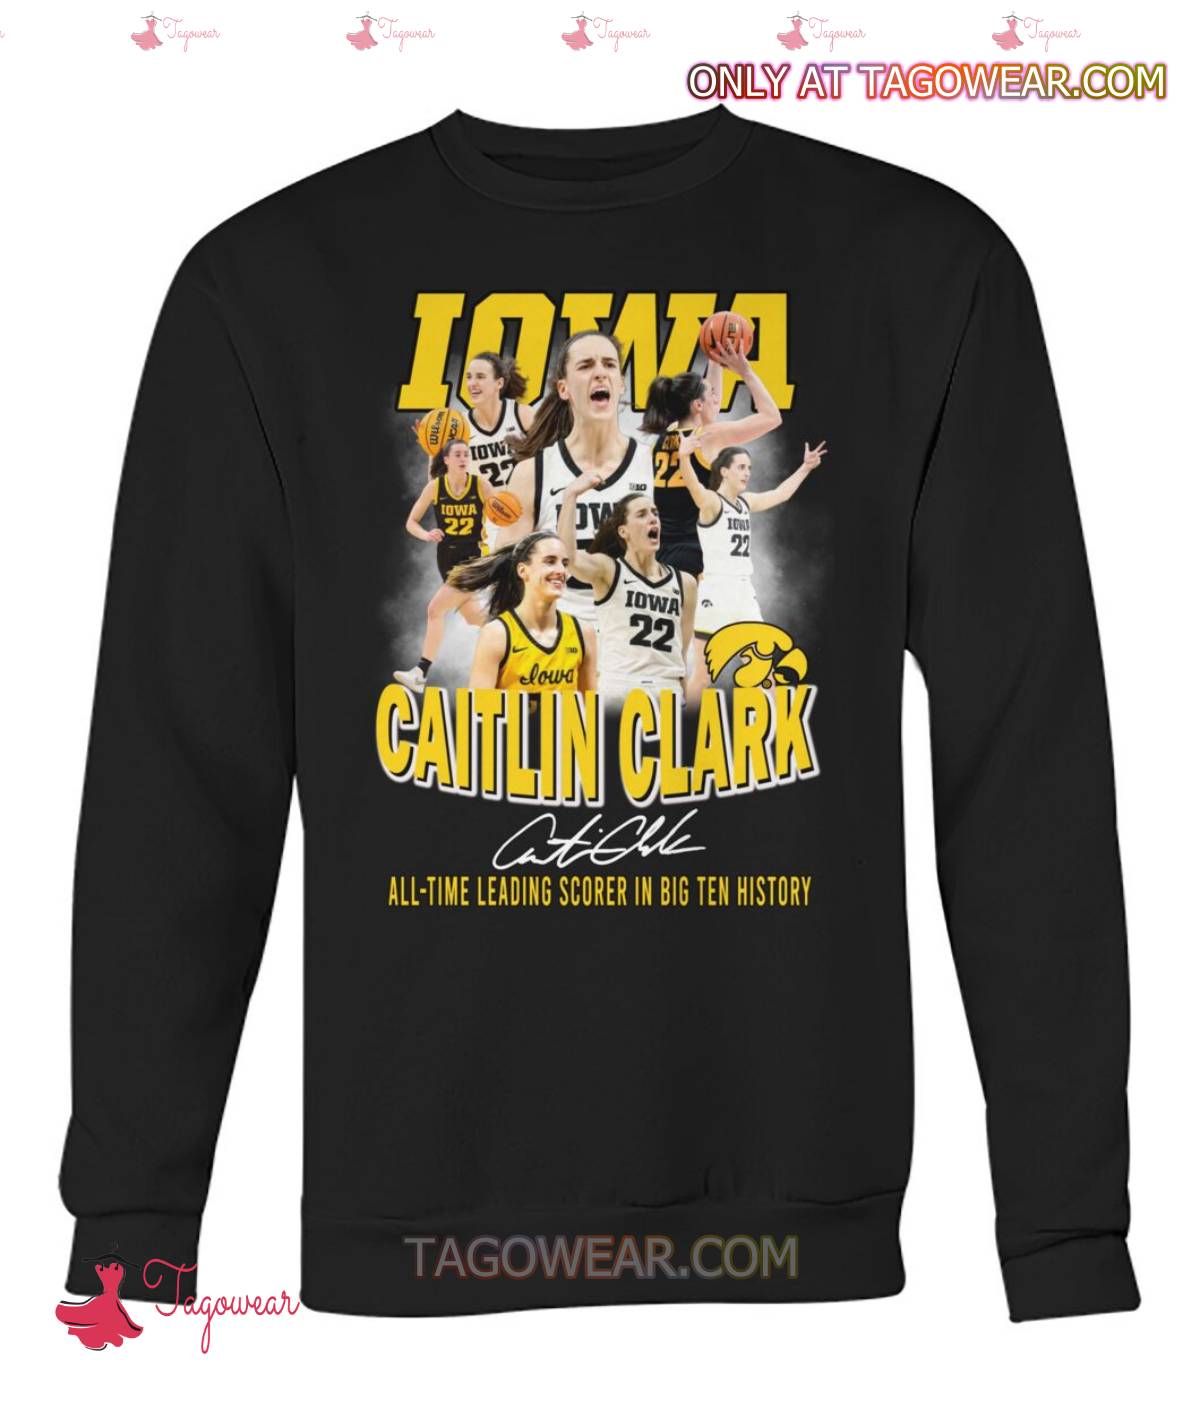 Iowa Caitlin Clark Signature All-time Leading Scorer In Big Ten History Shirt b